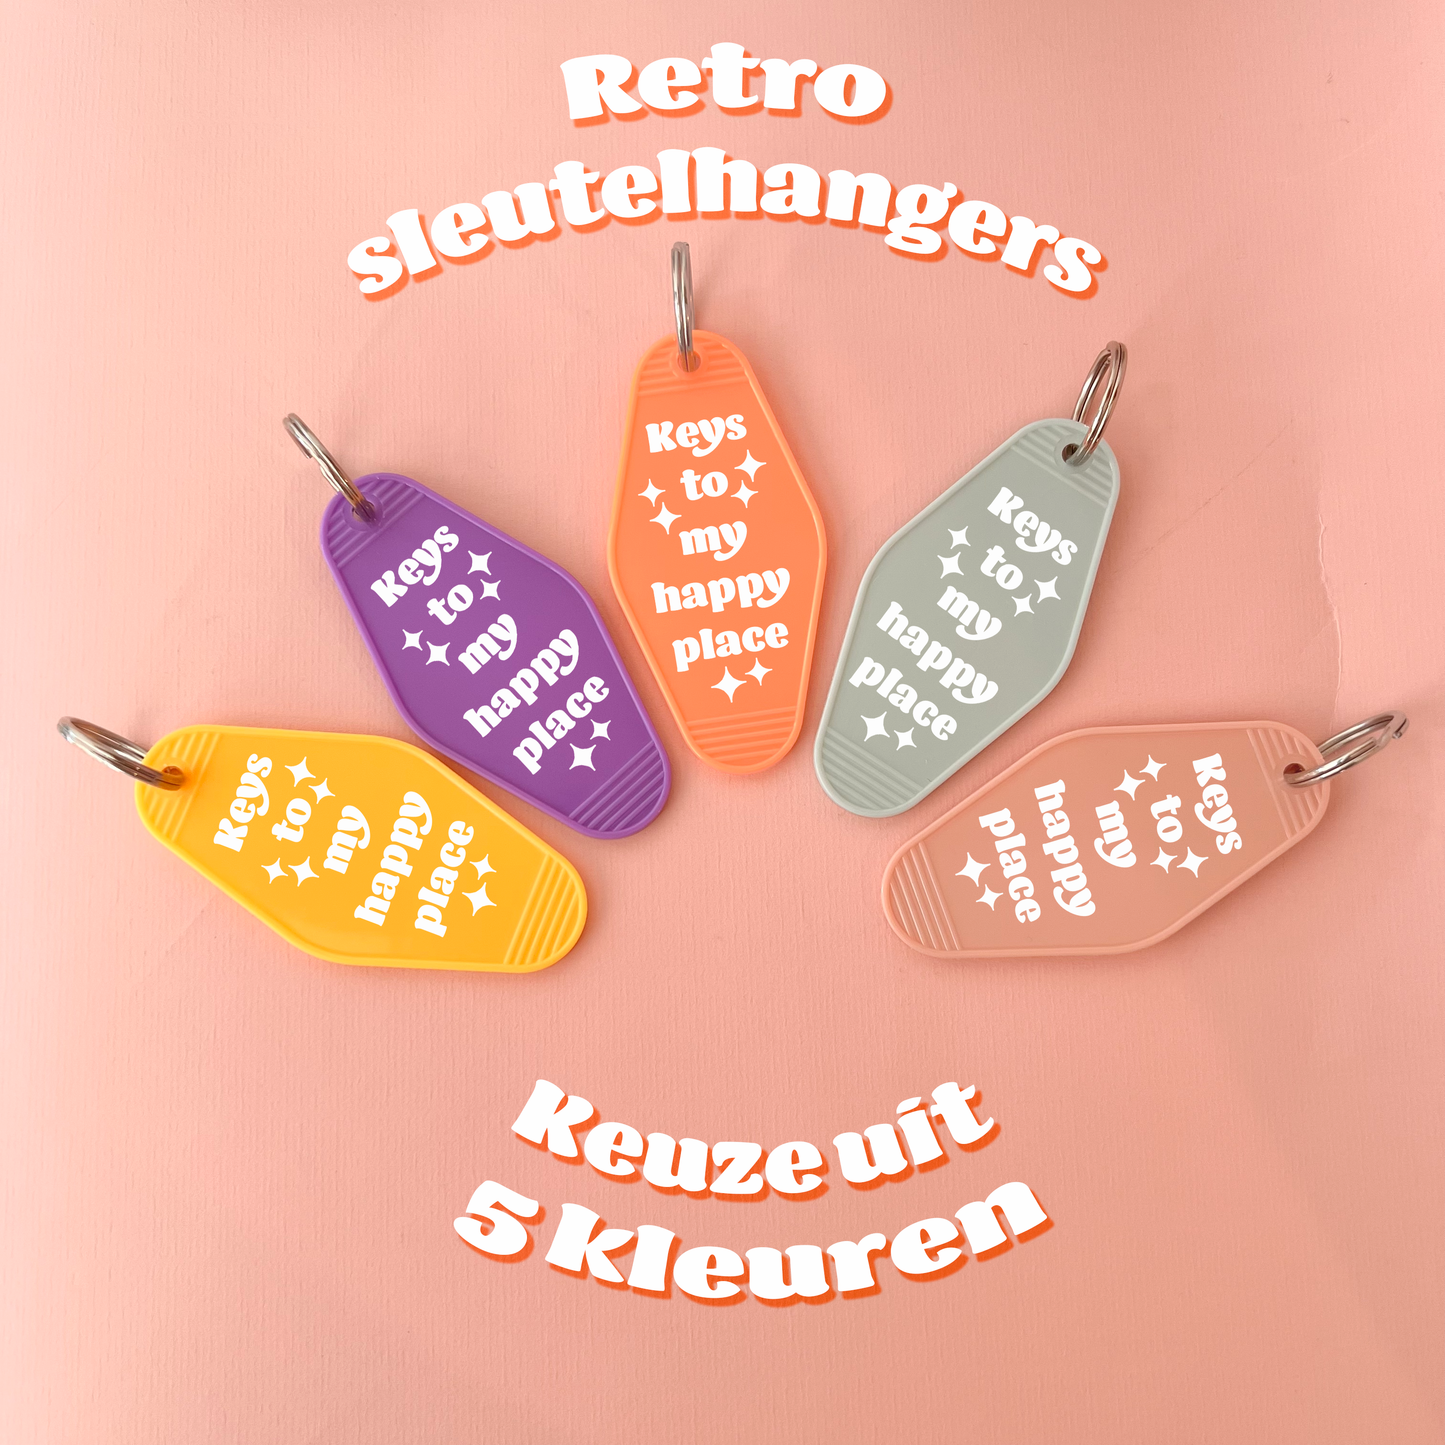 Retro sleutelhanger - Keys to my happy place